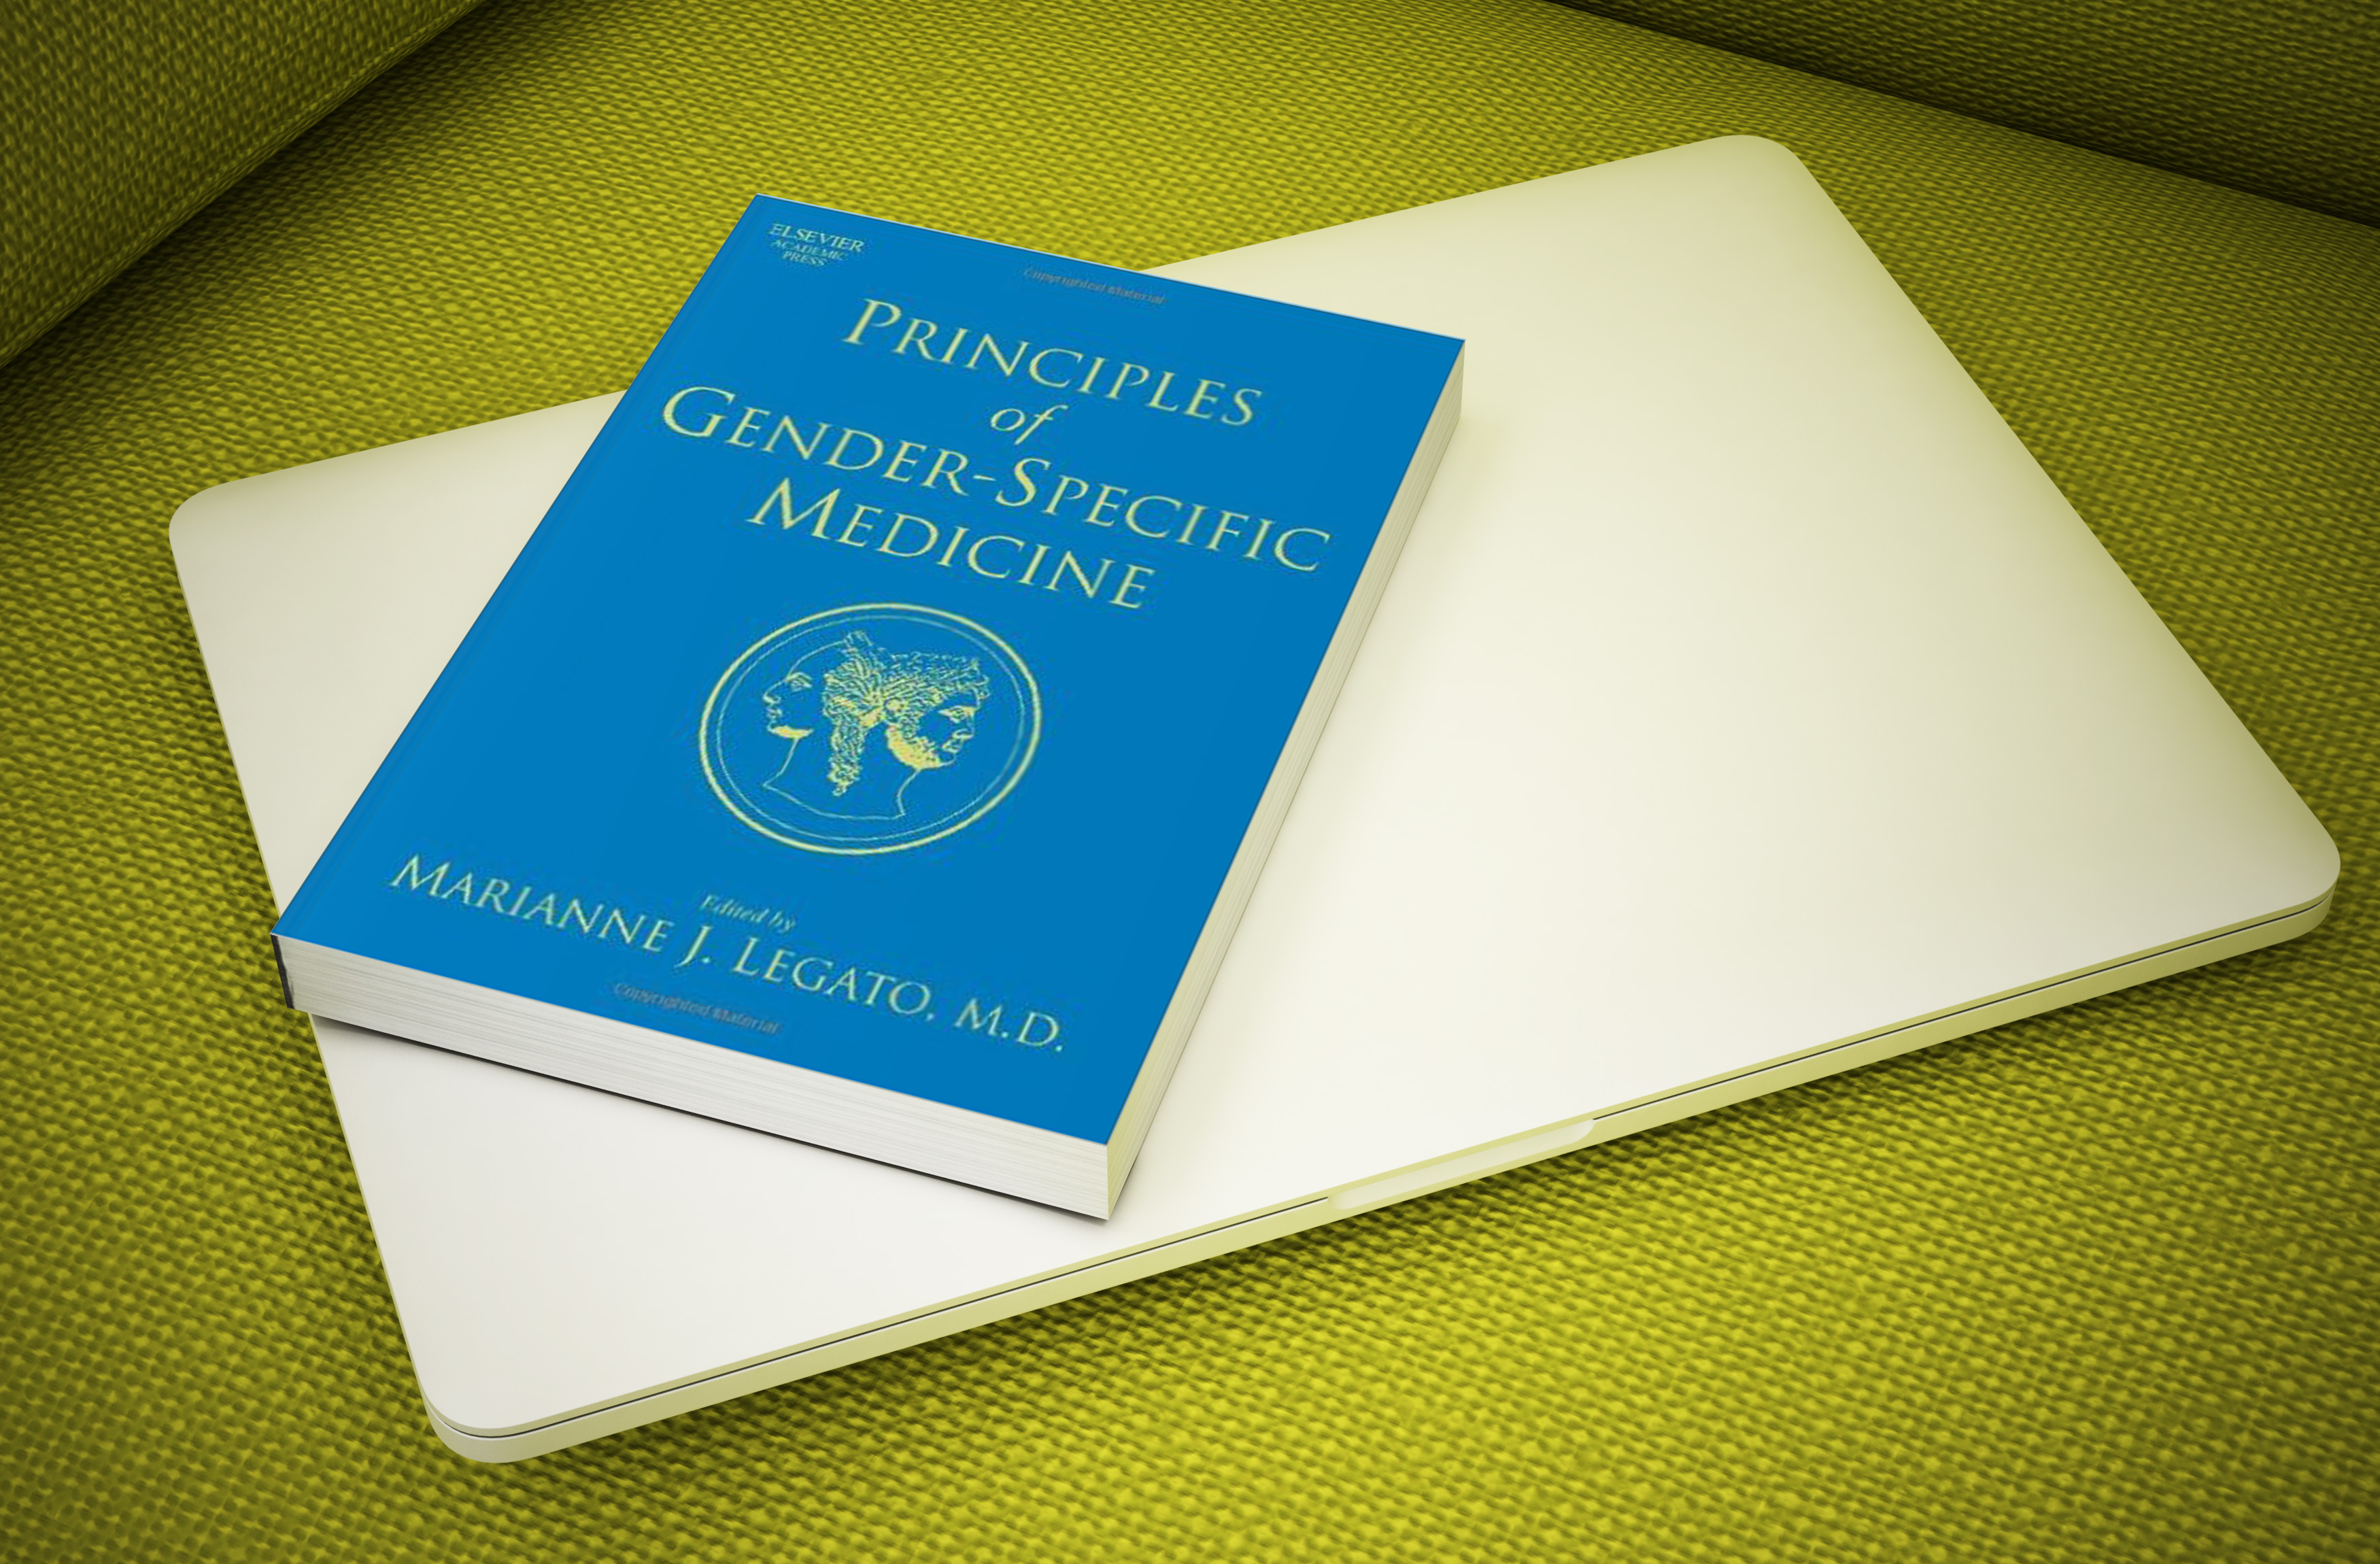 PRINCIPLES OF GENDER-SPECIFIC MEDICINE TEXTBOOK